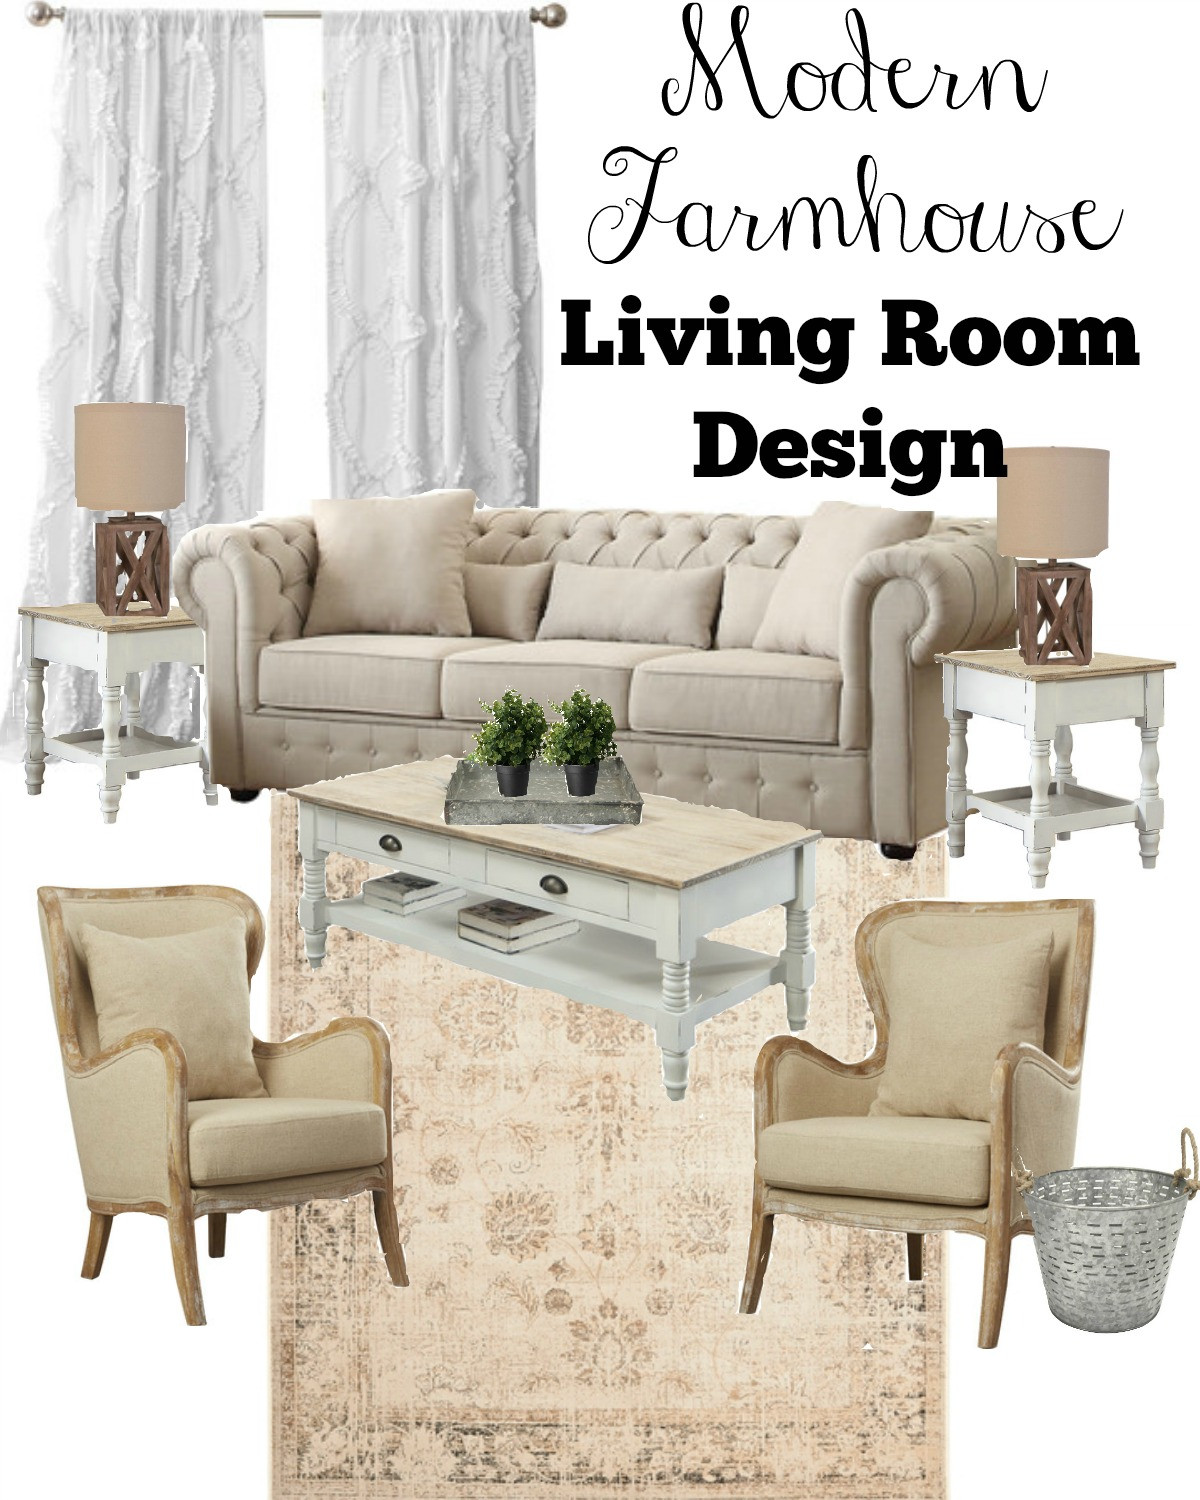 Farmhouse Style Living Room Ideas
 3 Key Tips for a Farmhouse Style Living Room